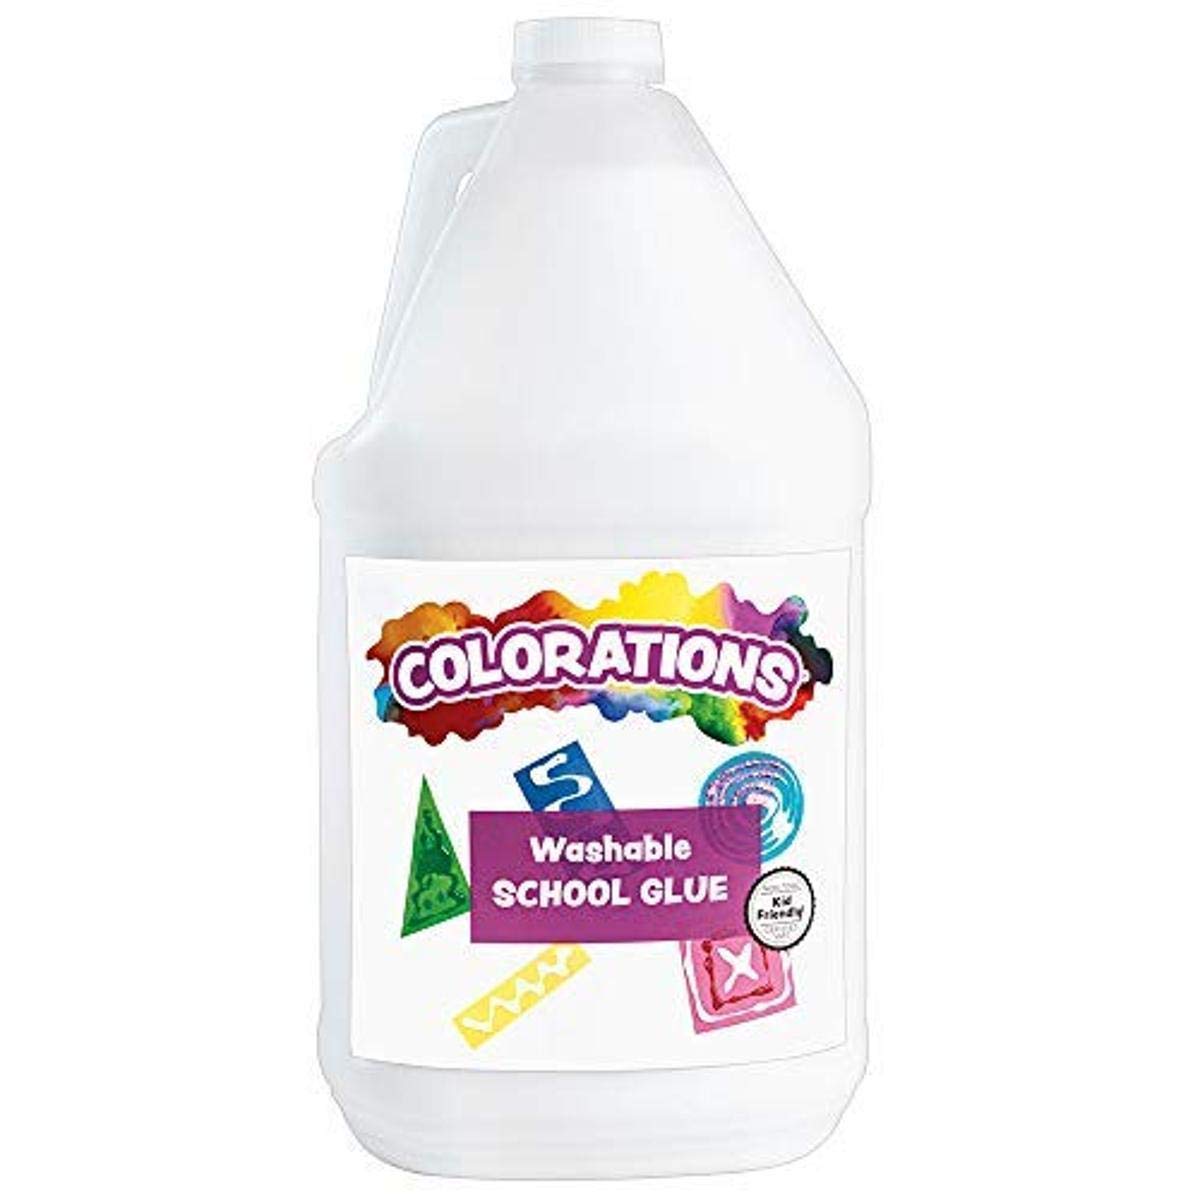 Elmer's Liquid School Glue, Clear, Washable, 9 Ounces, 1 Count